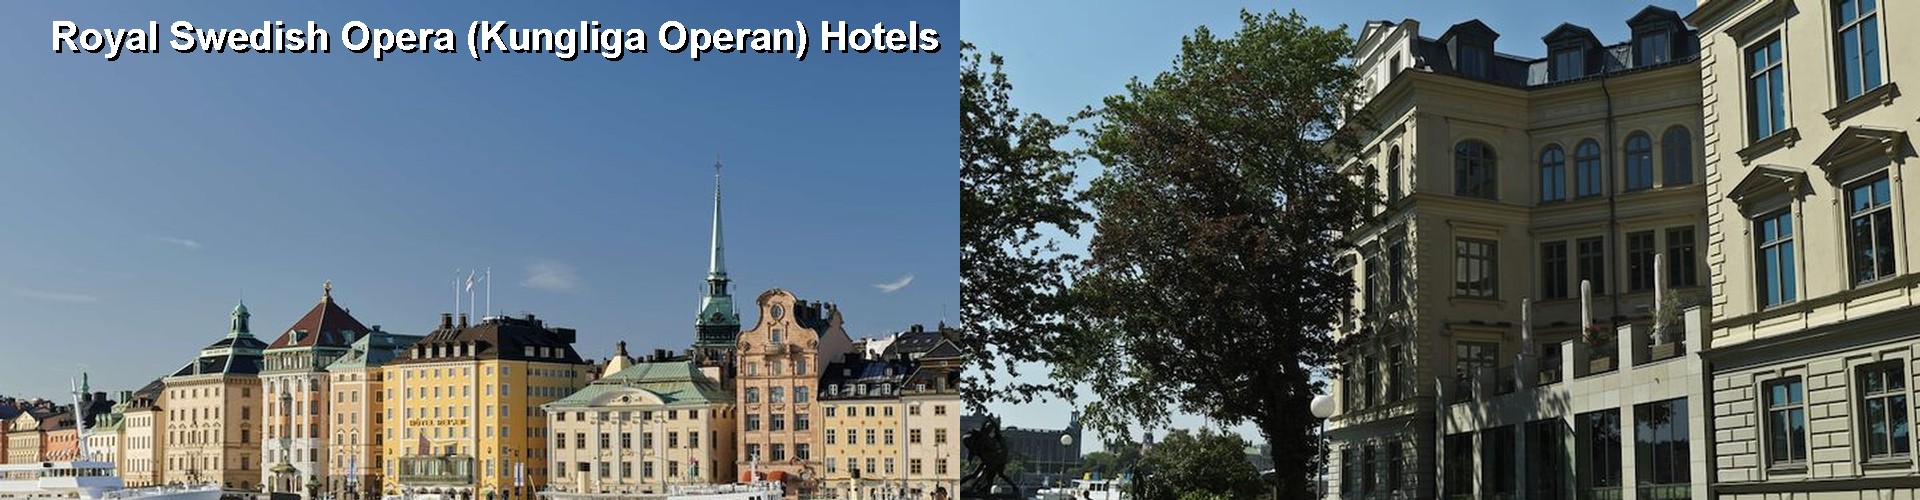 5 Best Hotels near Royal Swedish Opera (Kungliga Operan)